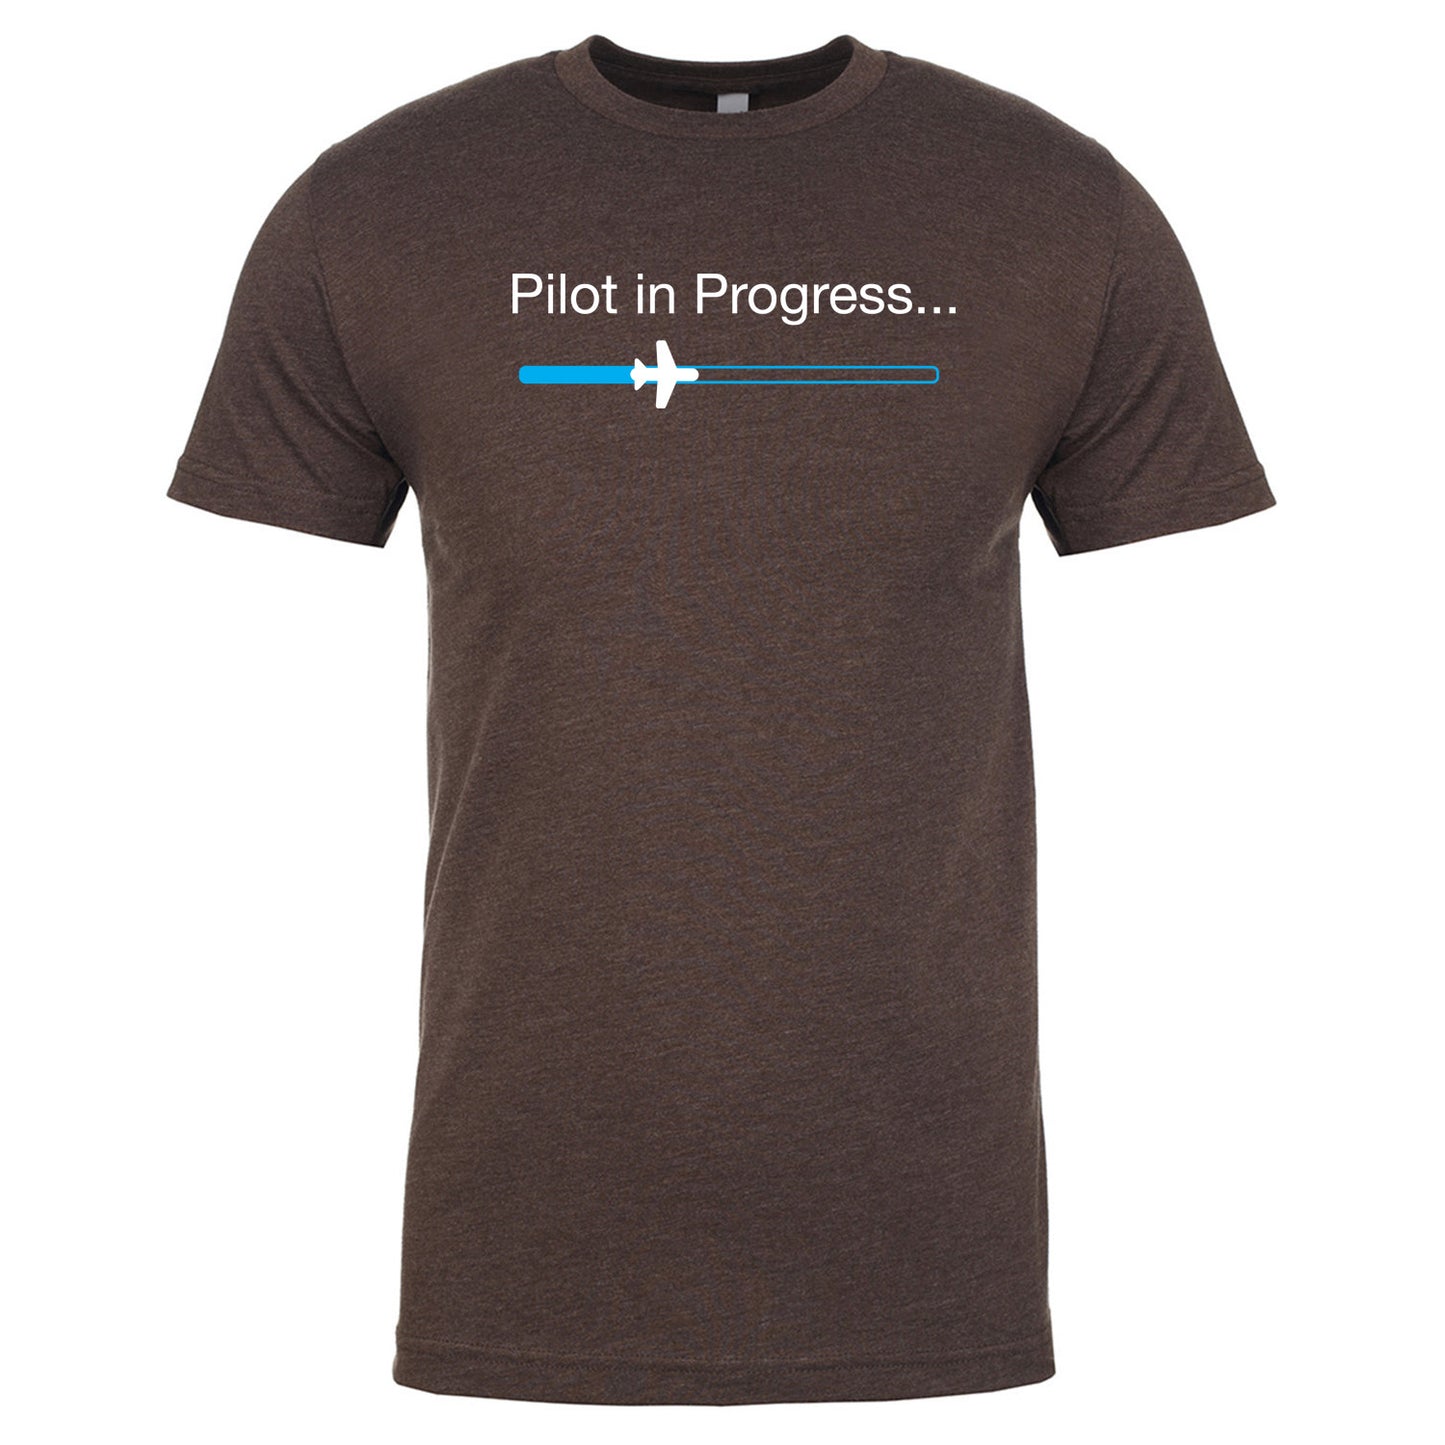 Pilot in Progress T-shirt • Great Student Pilot Gift